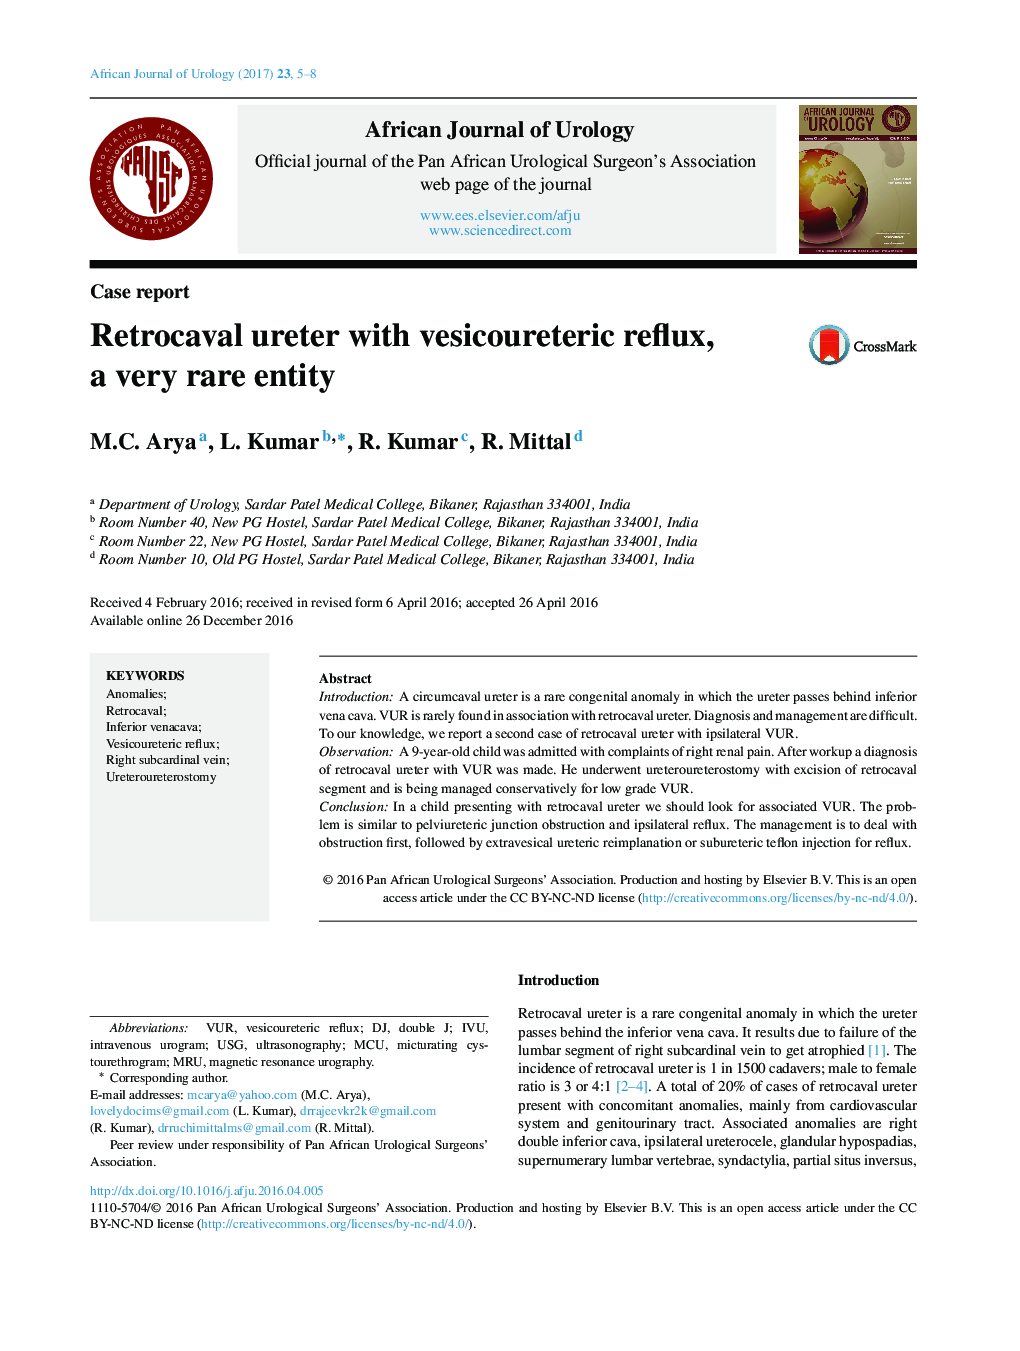 Case reportRetrocaval ureter with vesicoureteric reflux, a very rare entity